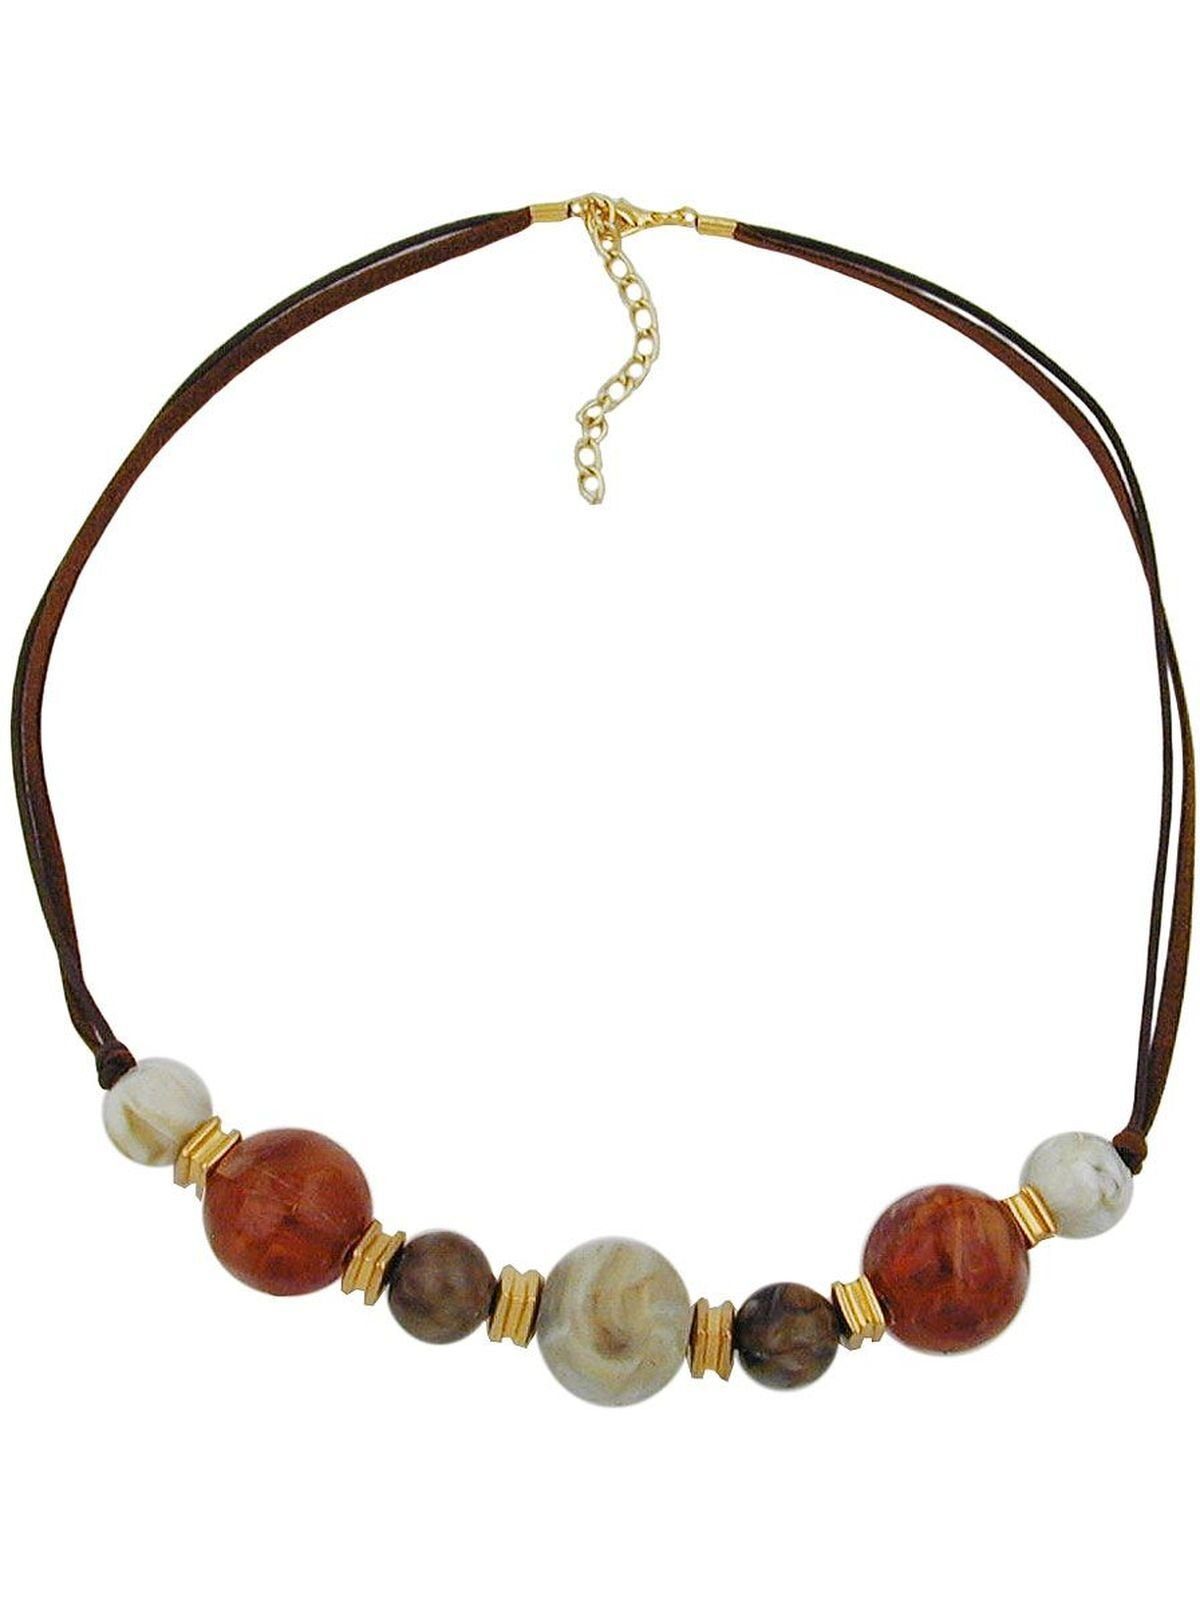 Gallay Perlenkette Kunststoffperlen natur-braun-karamel-goldfarben Kordel braun 55cm (1-tlg)